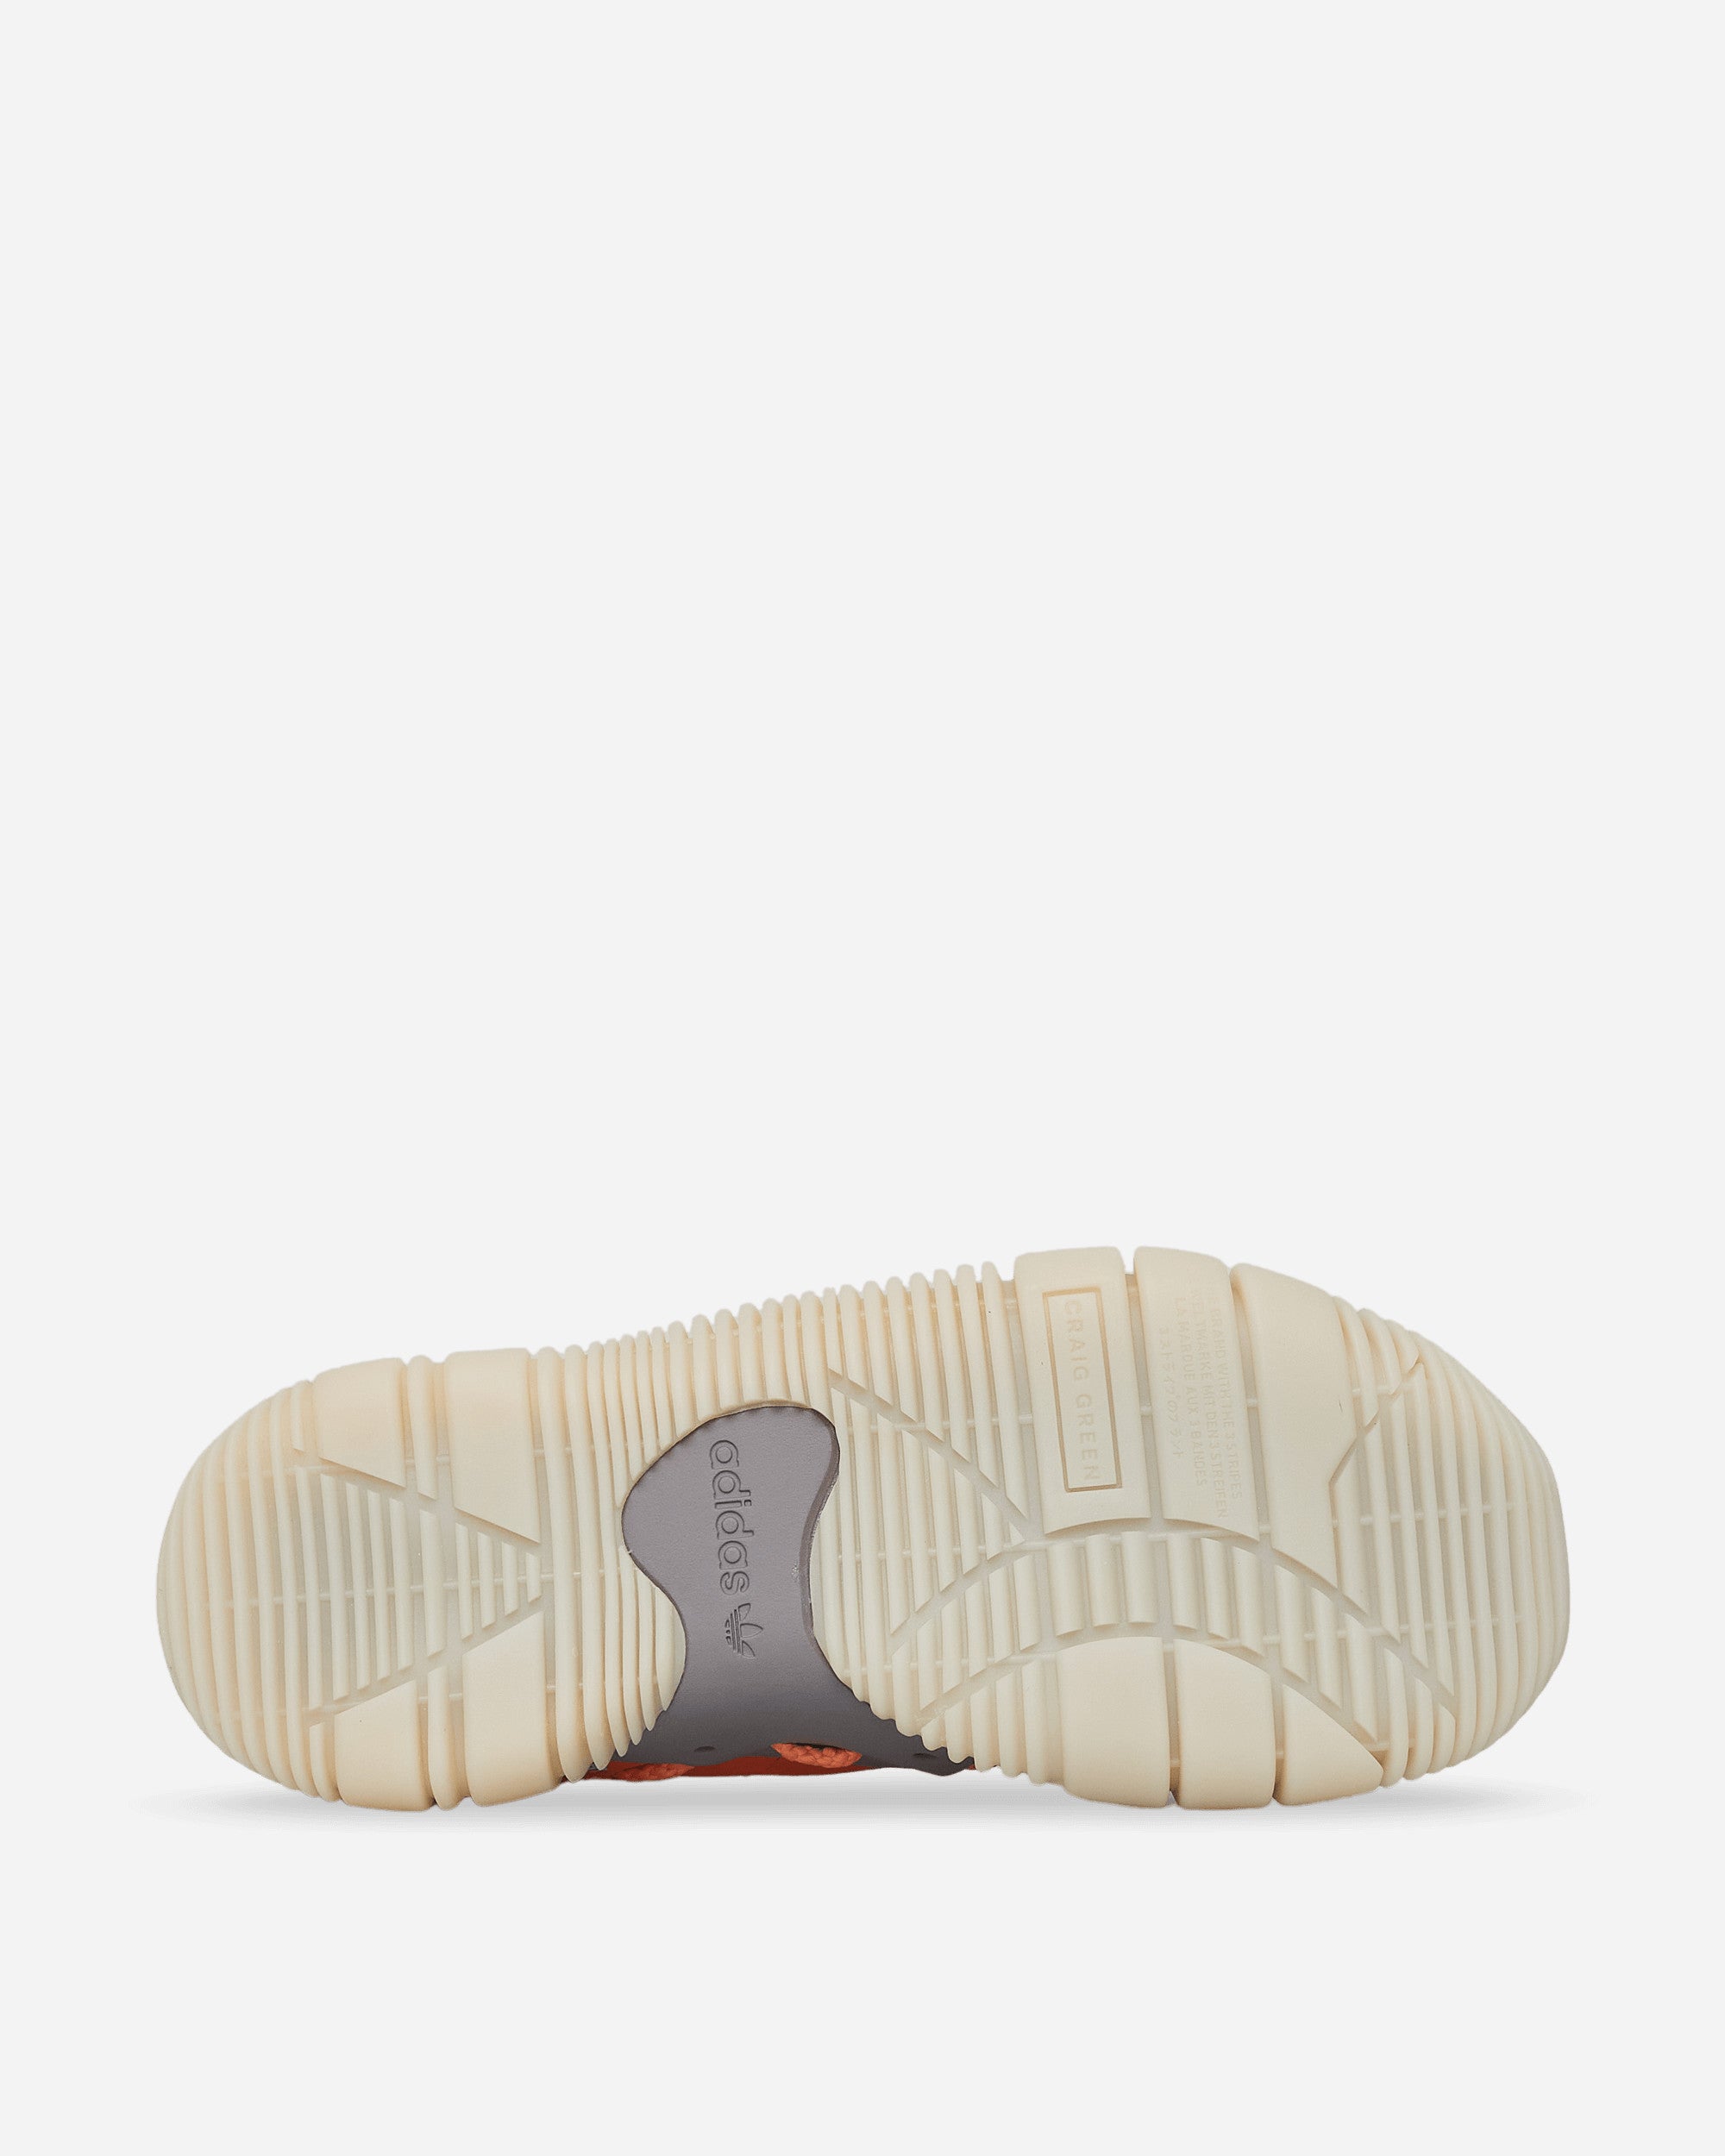 adidas Consortium Cg Scuba Phormar Tactile Orange/Glowblue Sneakers Low GW5858 001